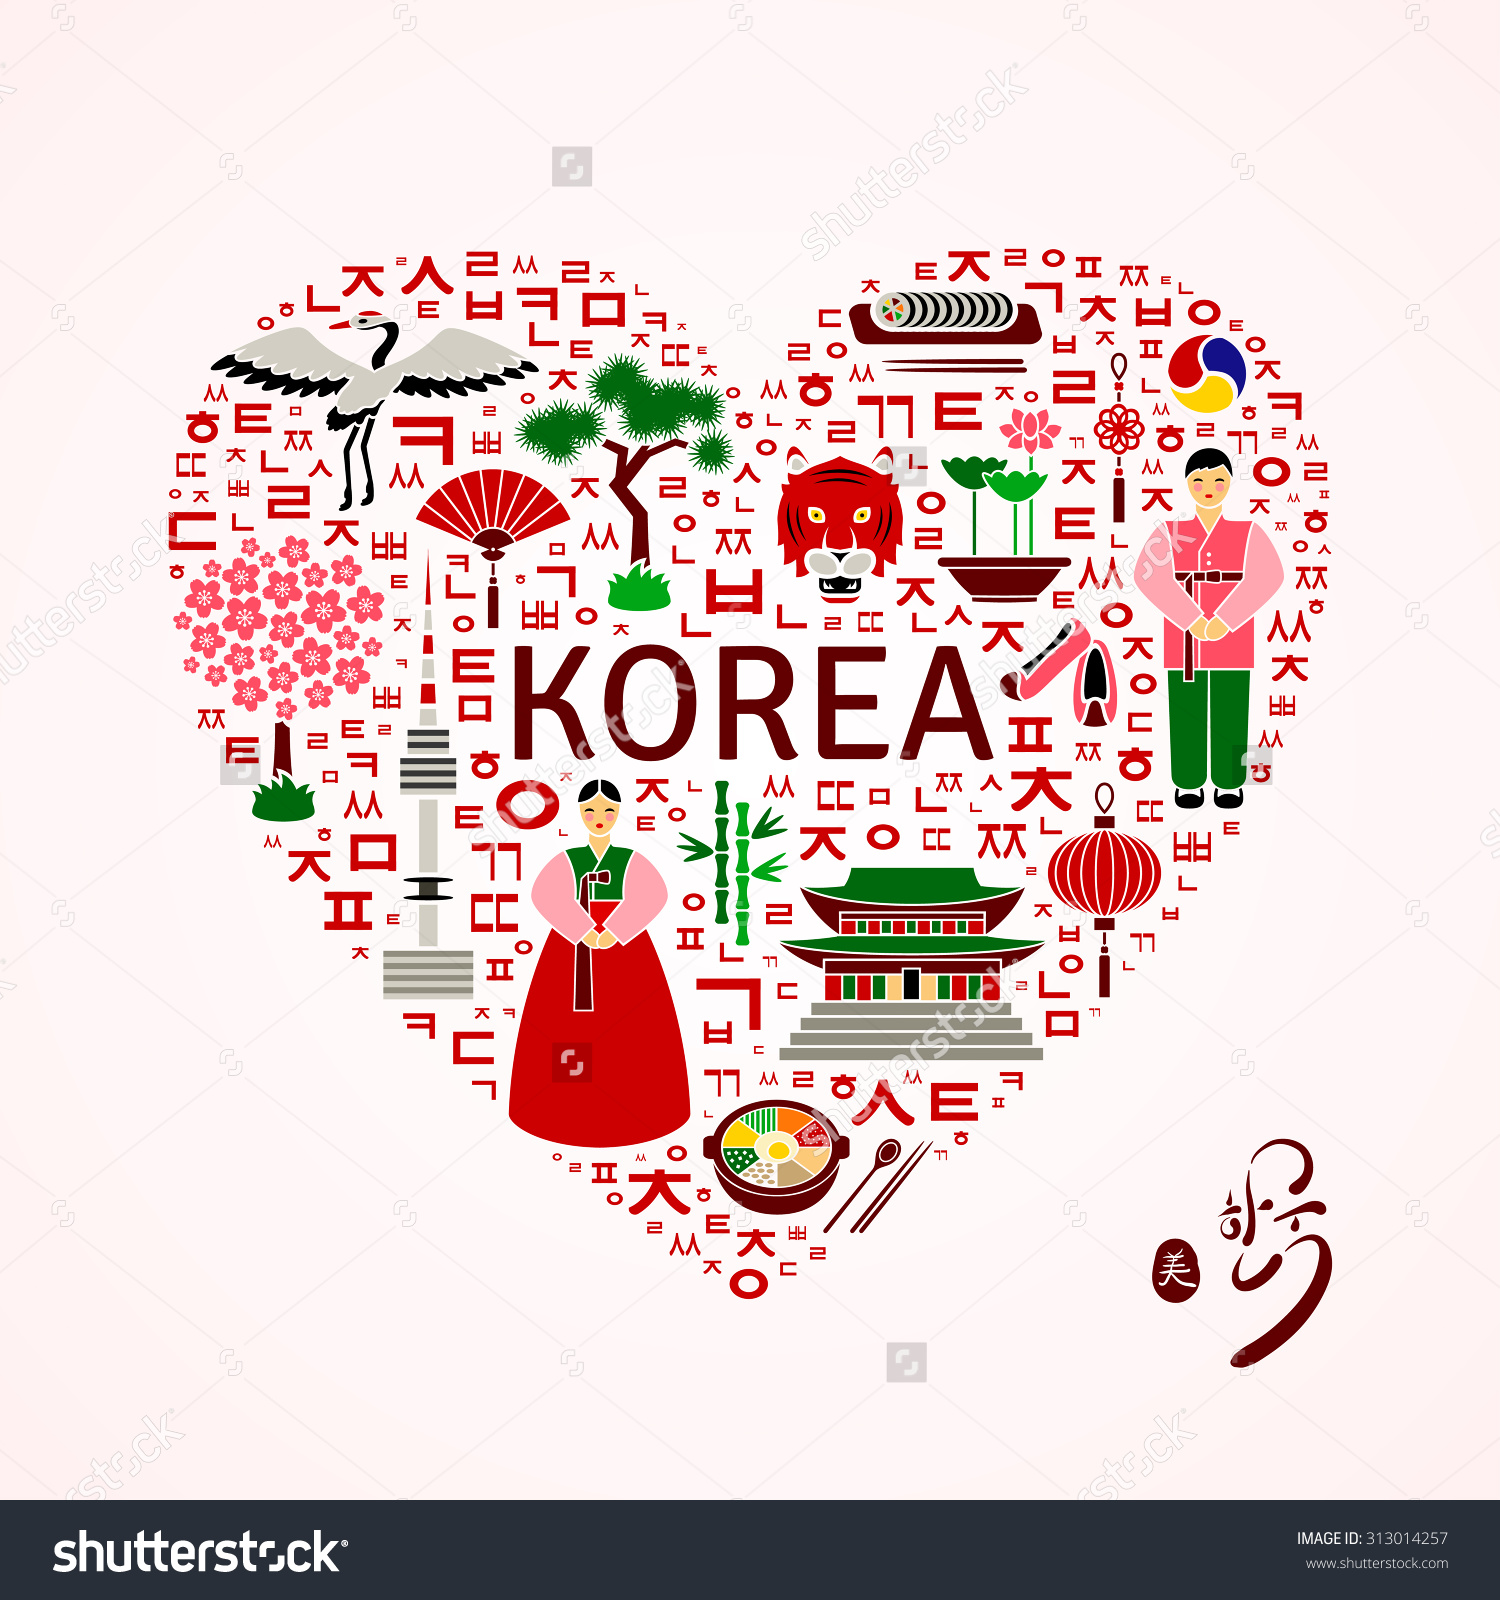 Download korean cute heart clipart 20 free Cliparts | Download ...